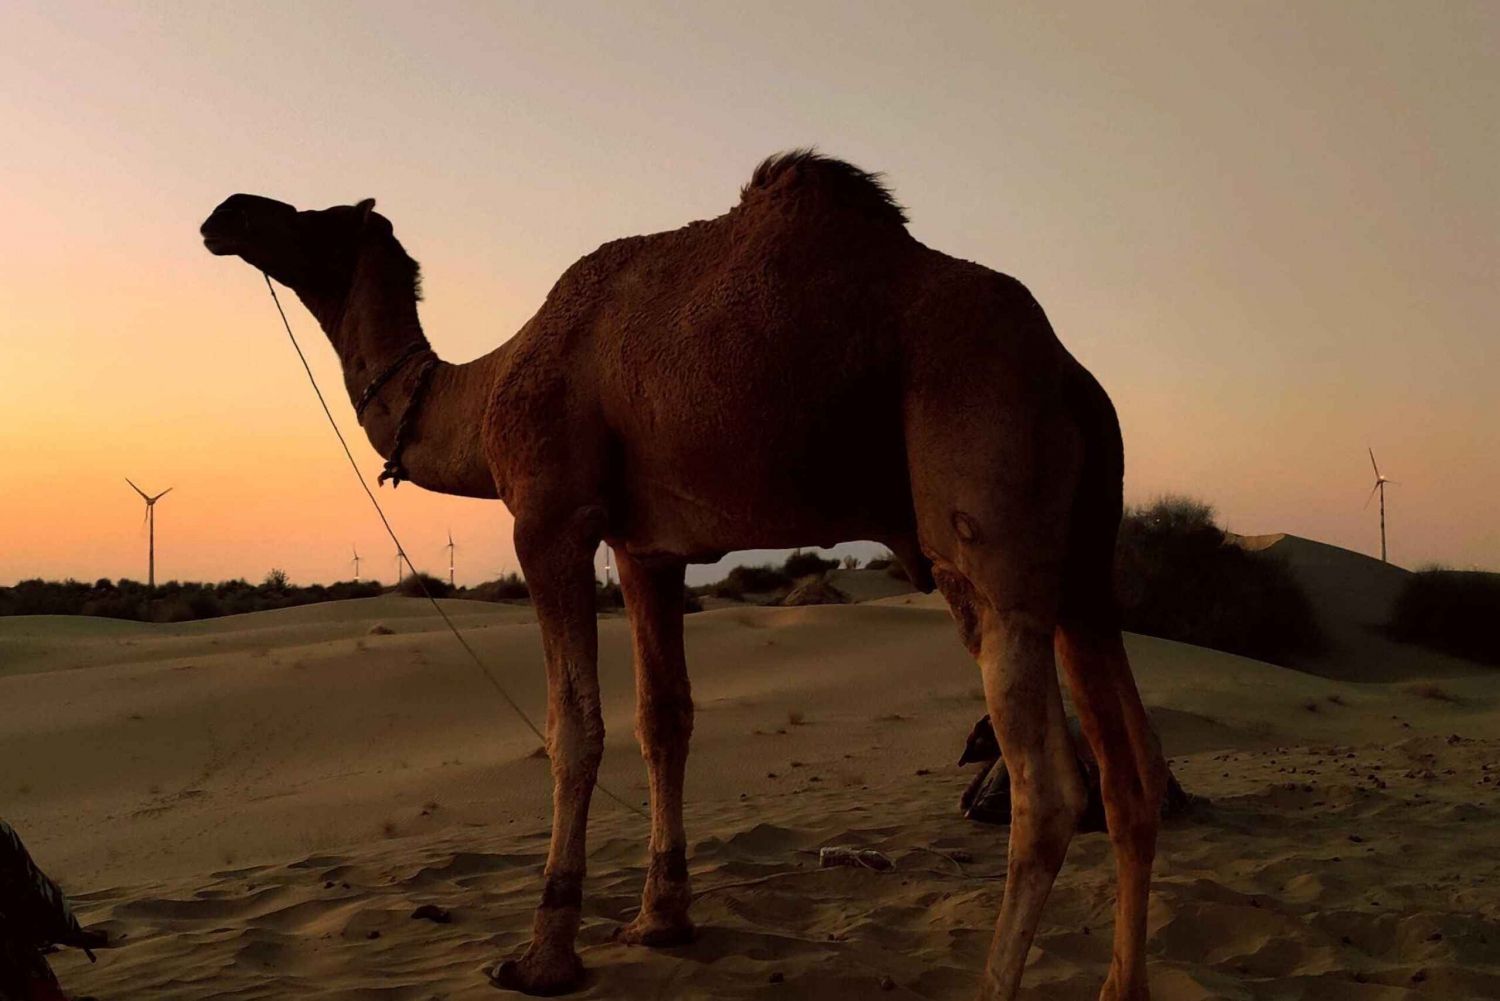 Half Day Desert Safari with Camel ride & dinner